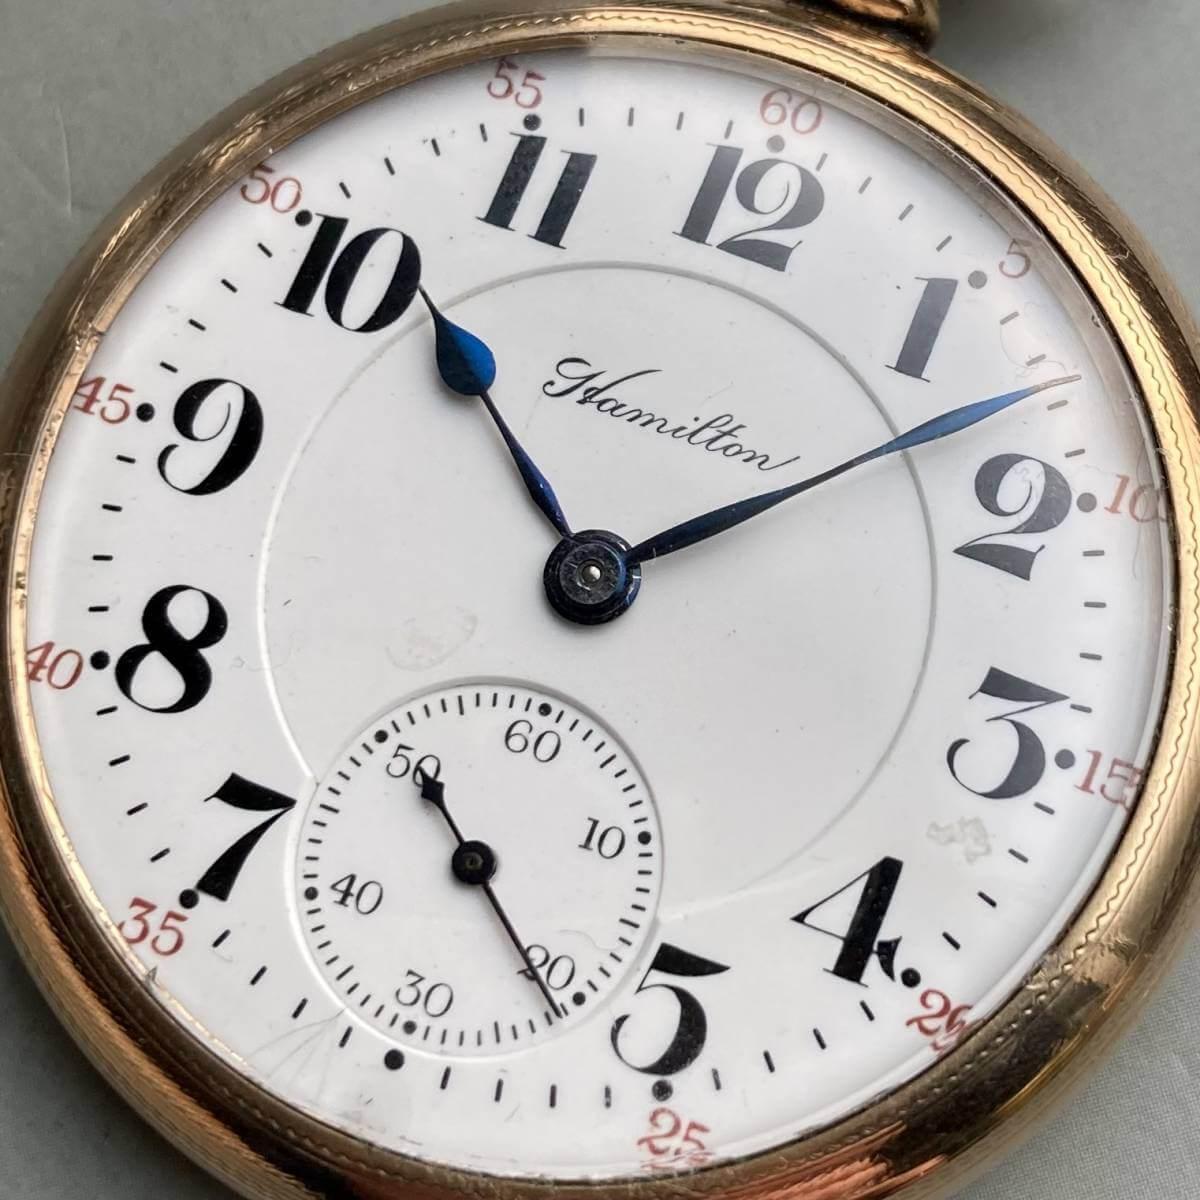 Hamilton antique pocket watch manual winding open face gold case diameter 47 mm vintage pocket watch - Murphy Johnson Watches Co.